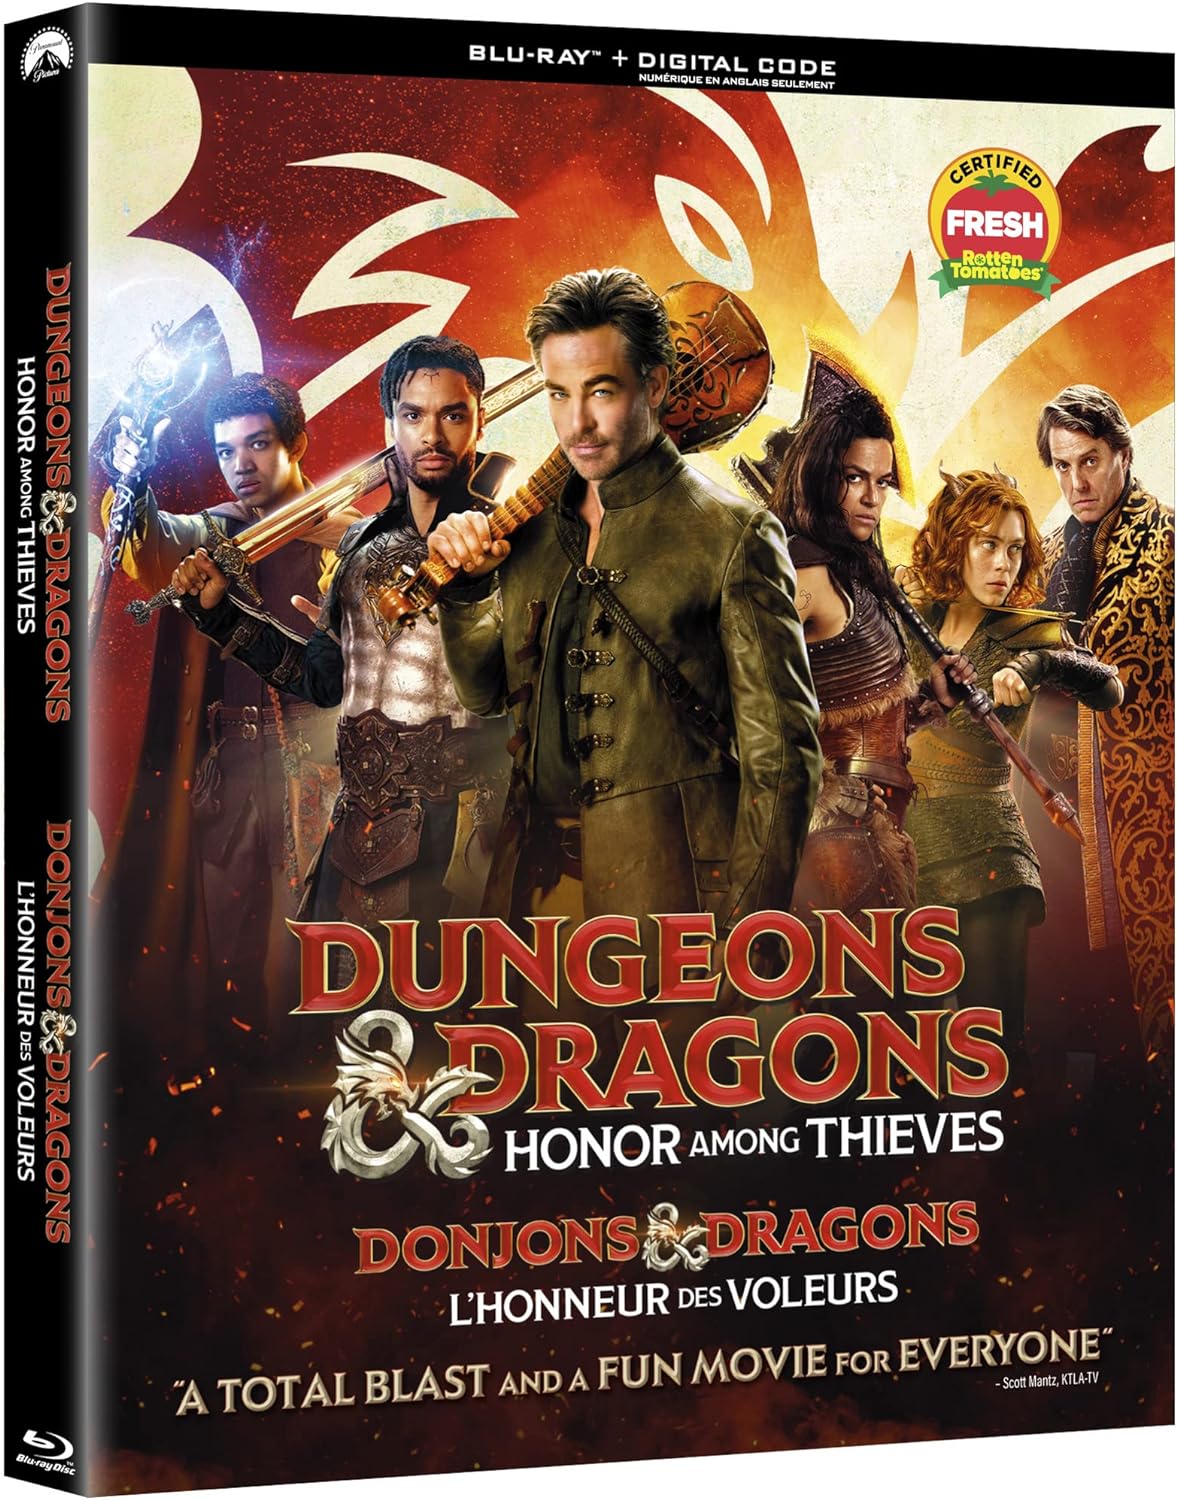 Dungeons & Dragons: Honor Among Thieves [Blu-ray + Digital Copy] (Bilingual)